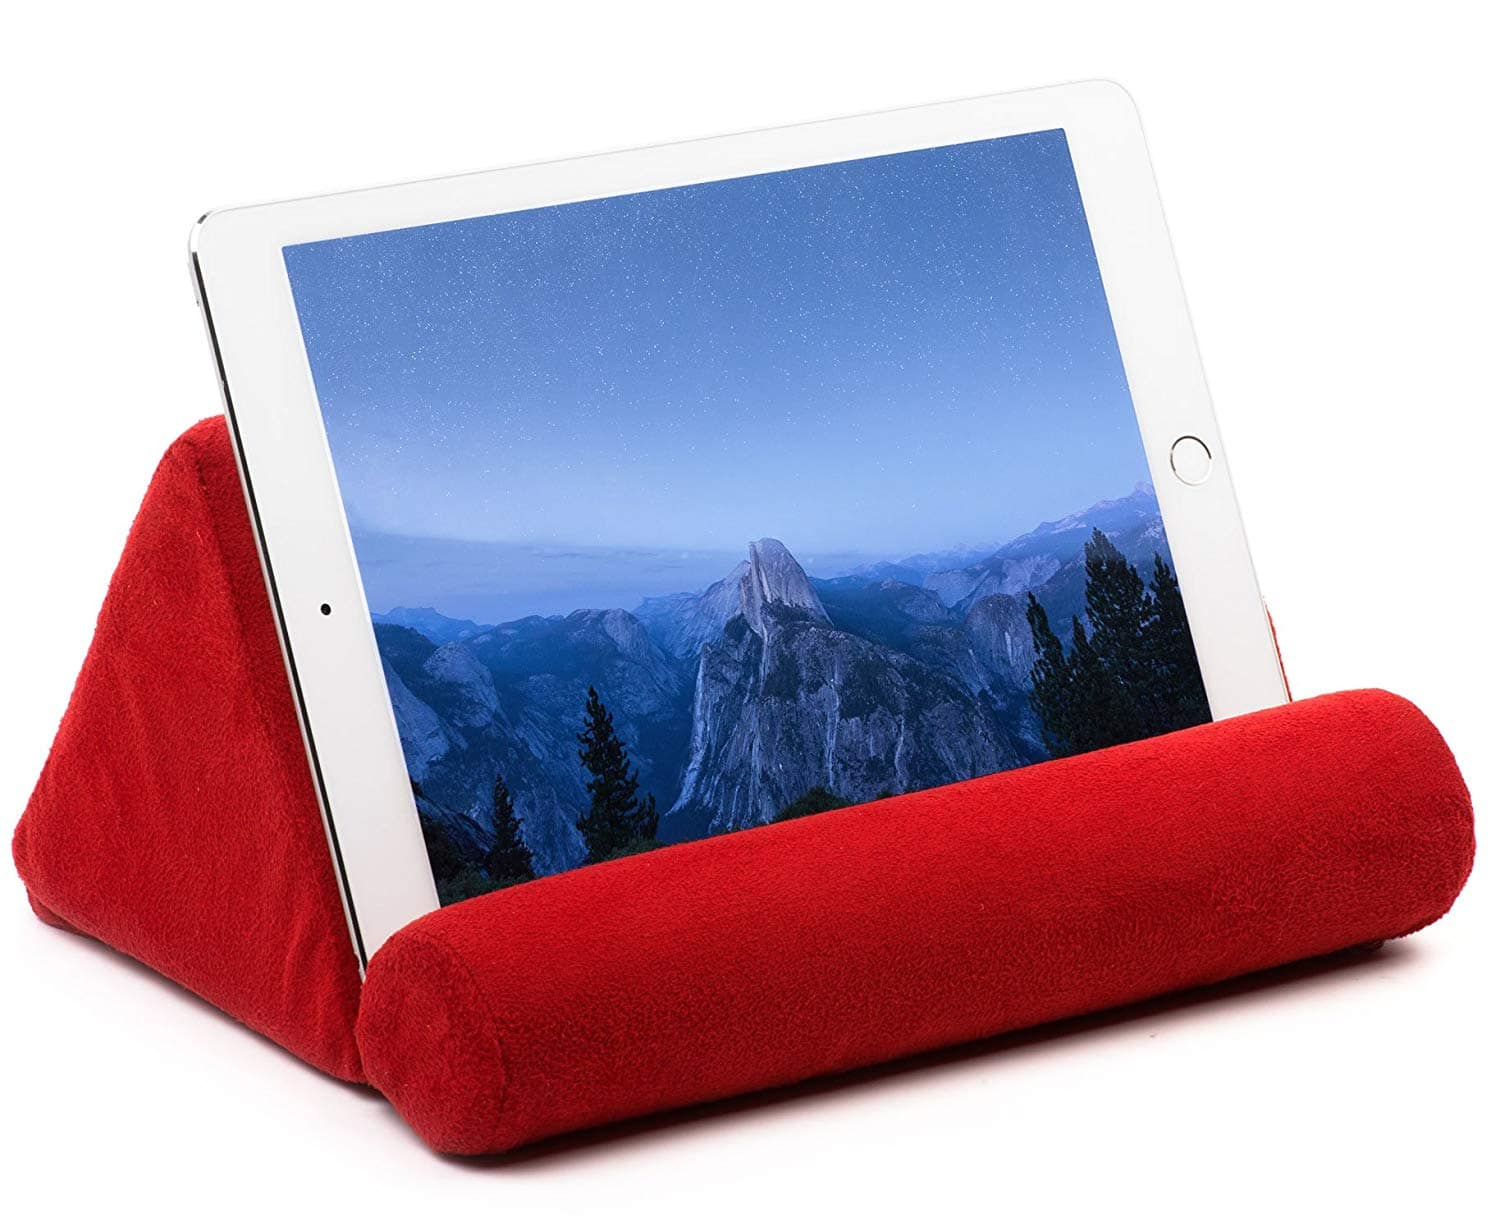 iPad-pillow-stand